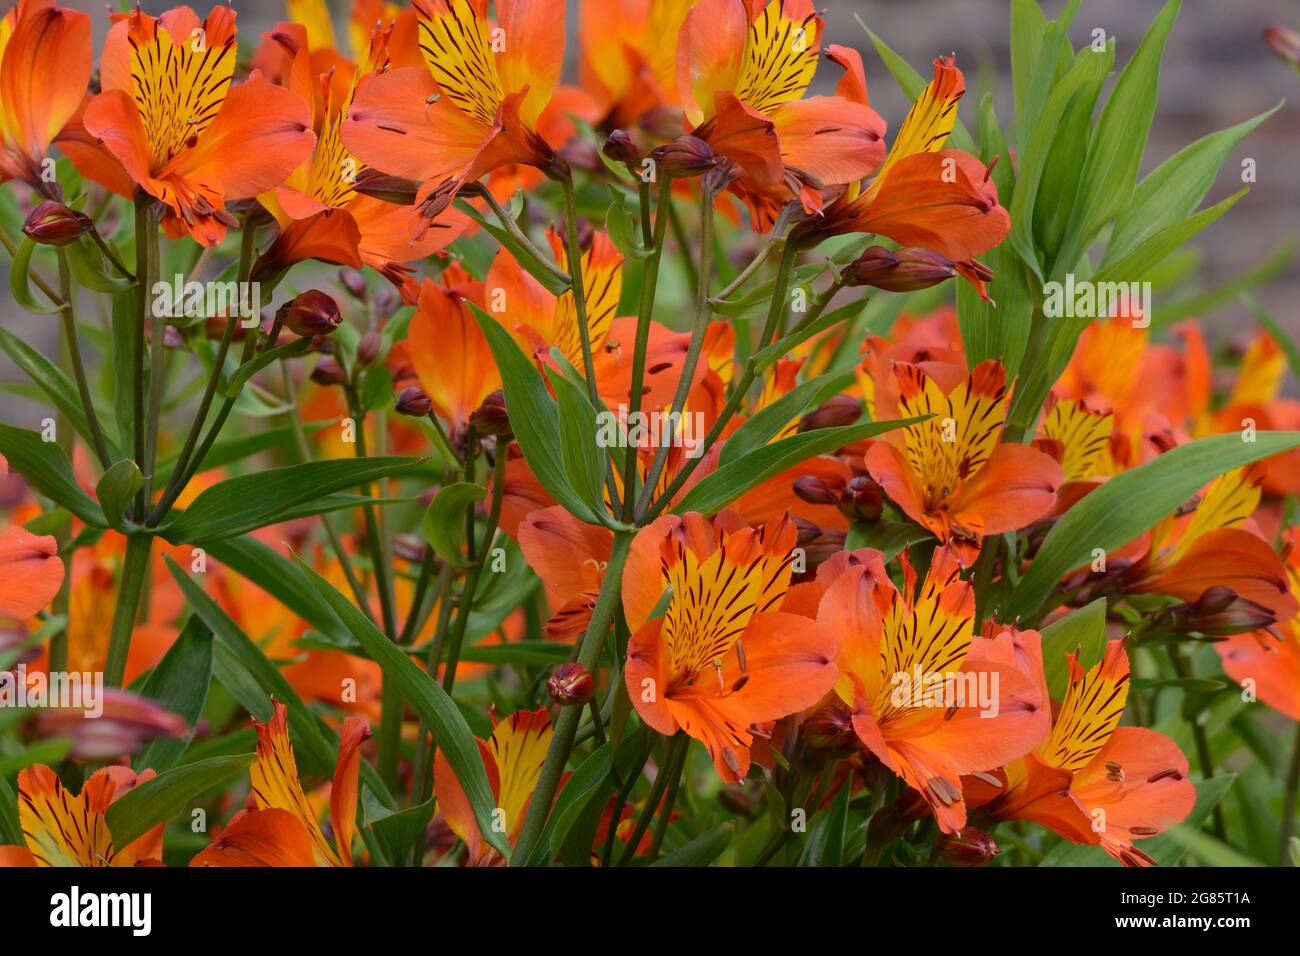 Alstromeria Orange King Peruvian Lily flowers Stock Photo